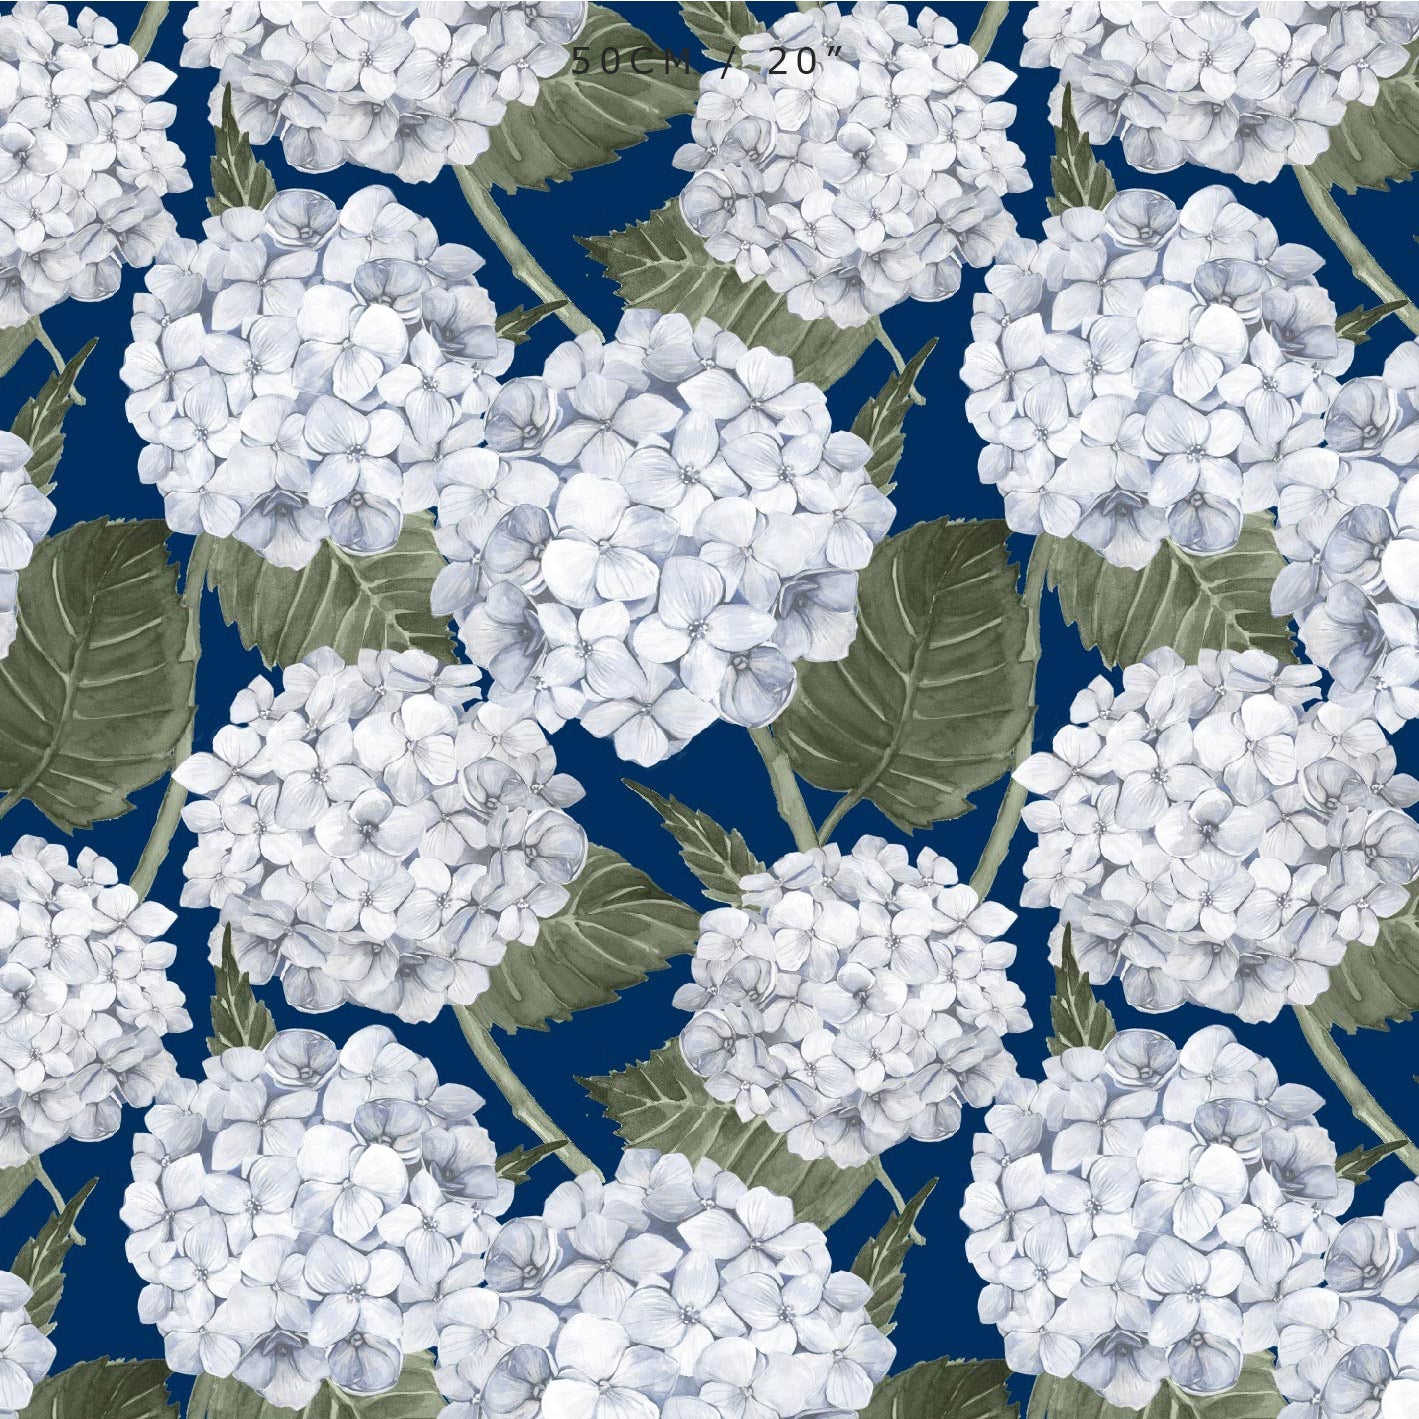 Hydrangea Garden Fabric - Navy - Hydrangea Lane Home